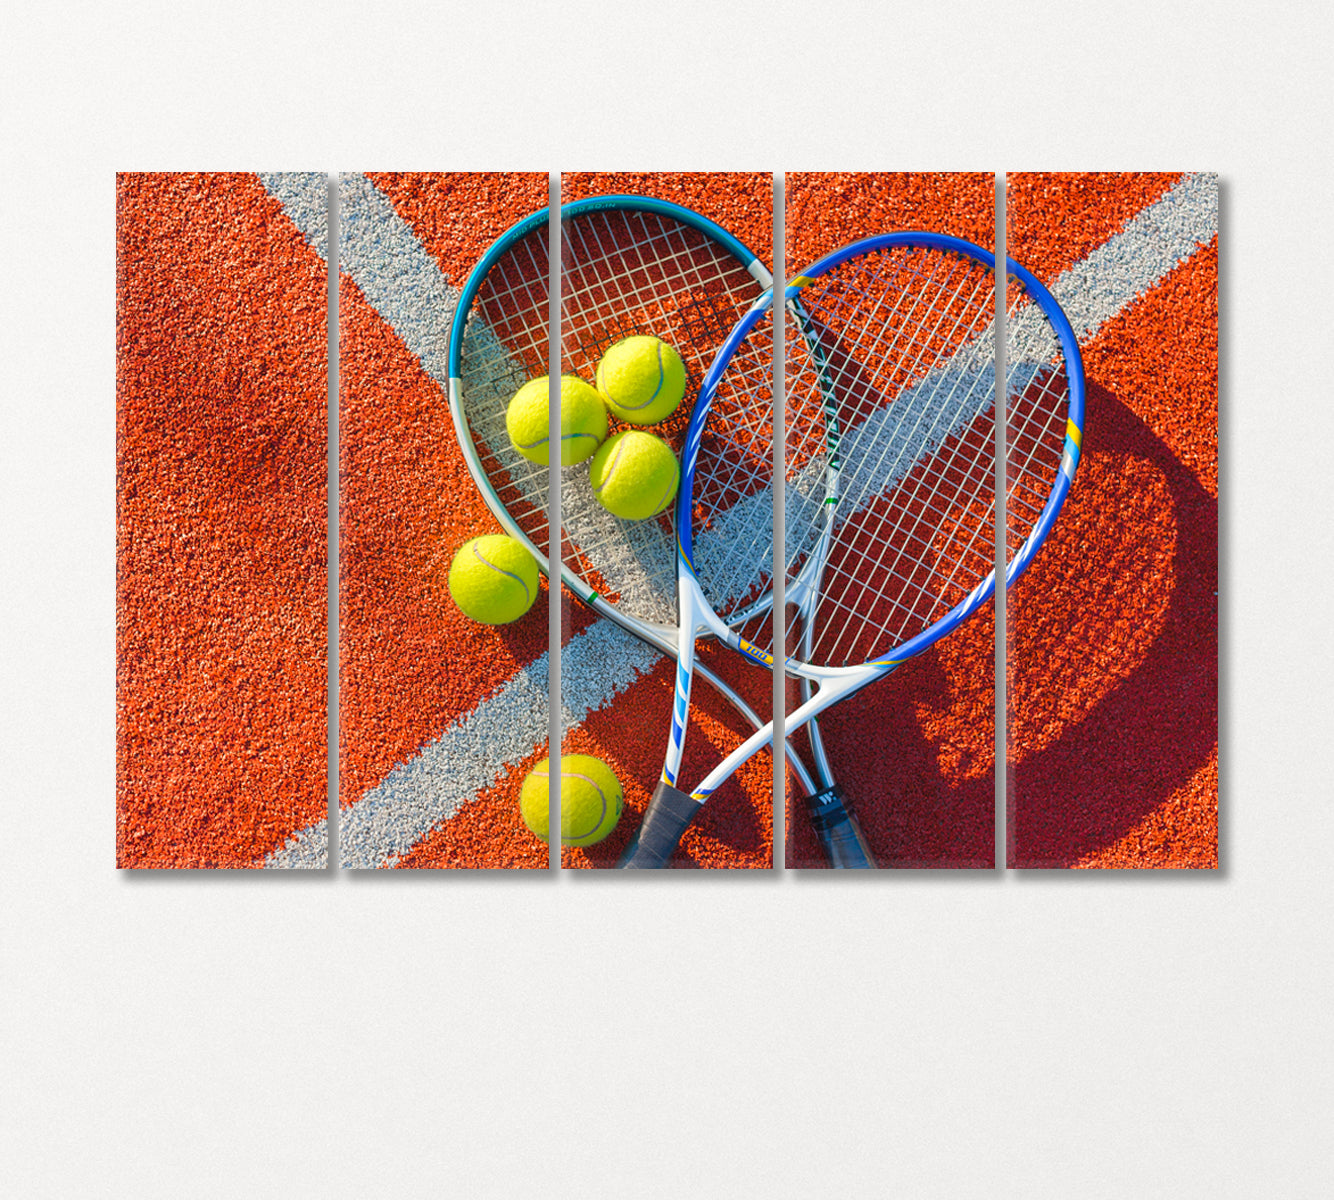 Pair of Tennis Rackets and Five Balls Canvas Print-Canvas Print-CetArt-5 Panels-36x24 inches-CetArt